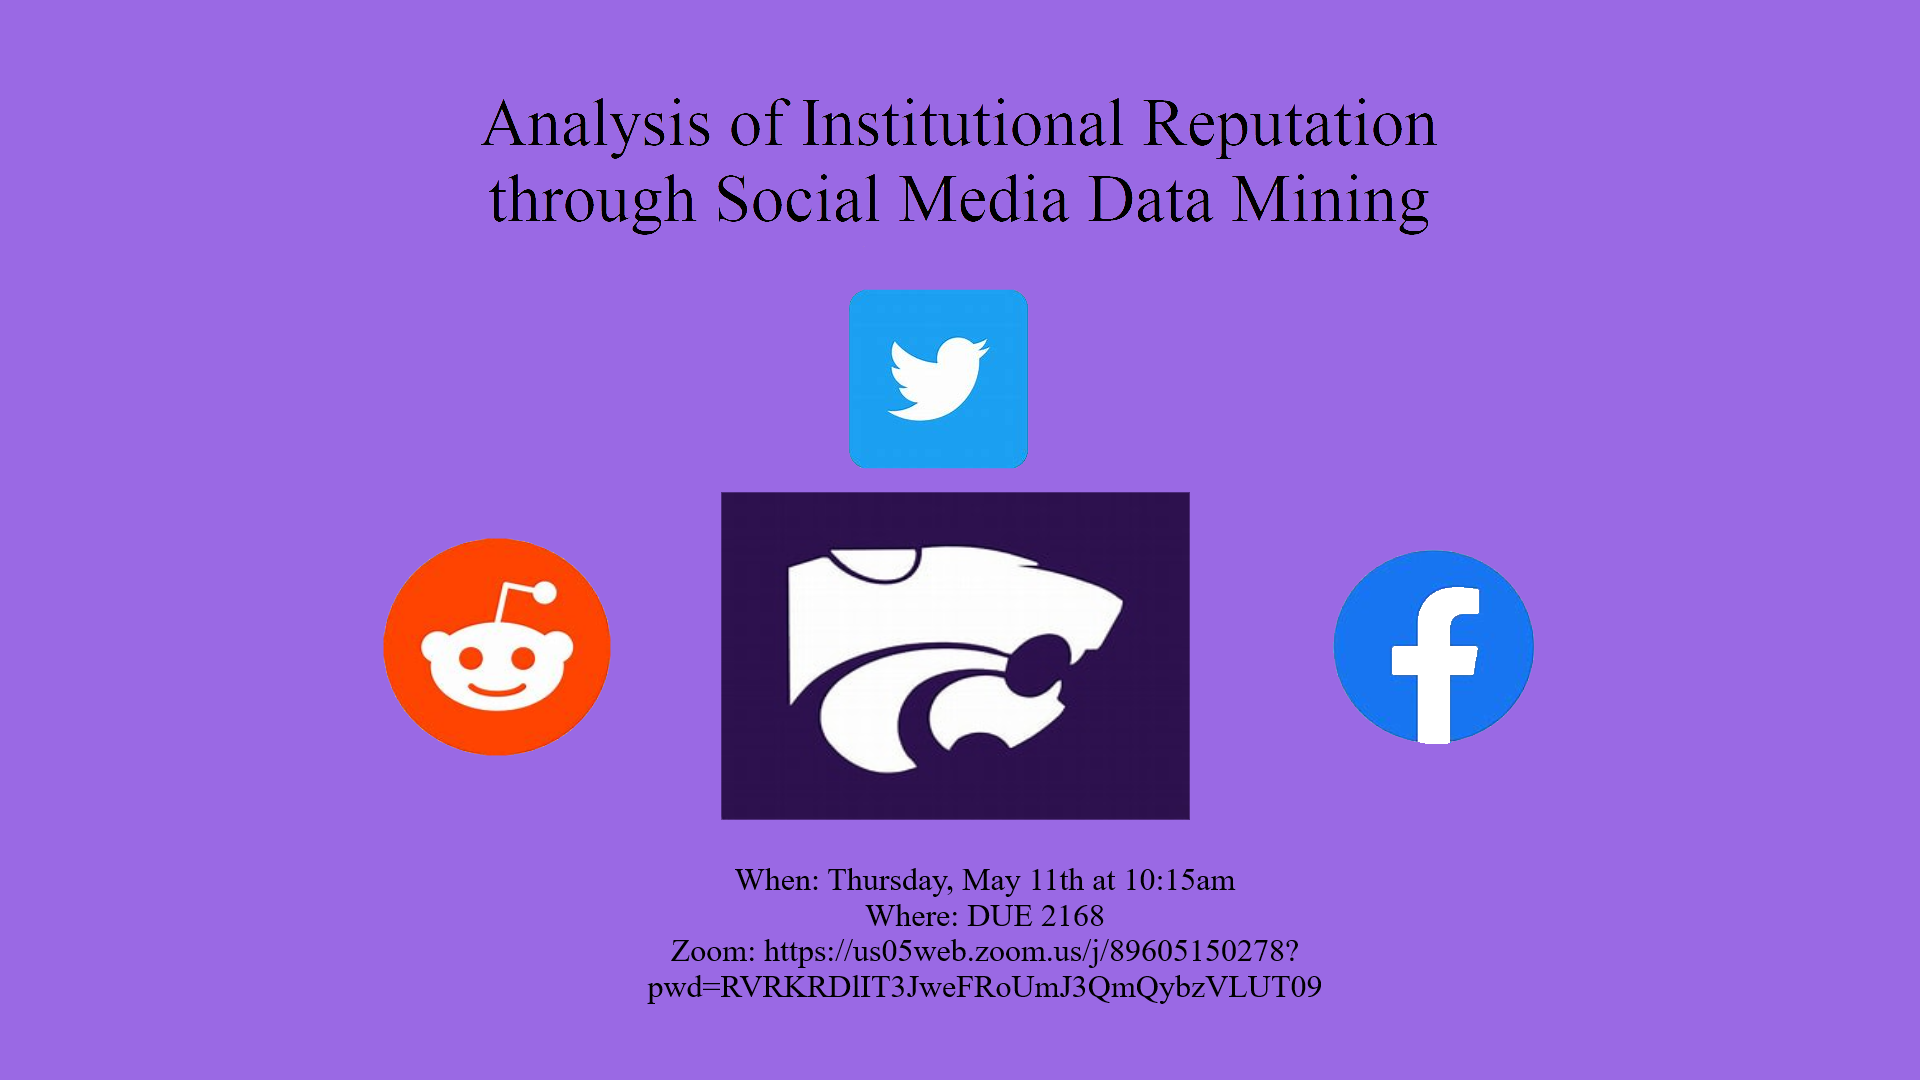 Analyses of Institutional Reputation through Social Media Data Mining